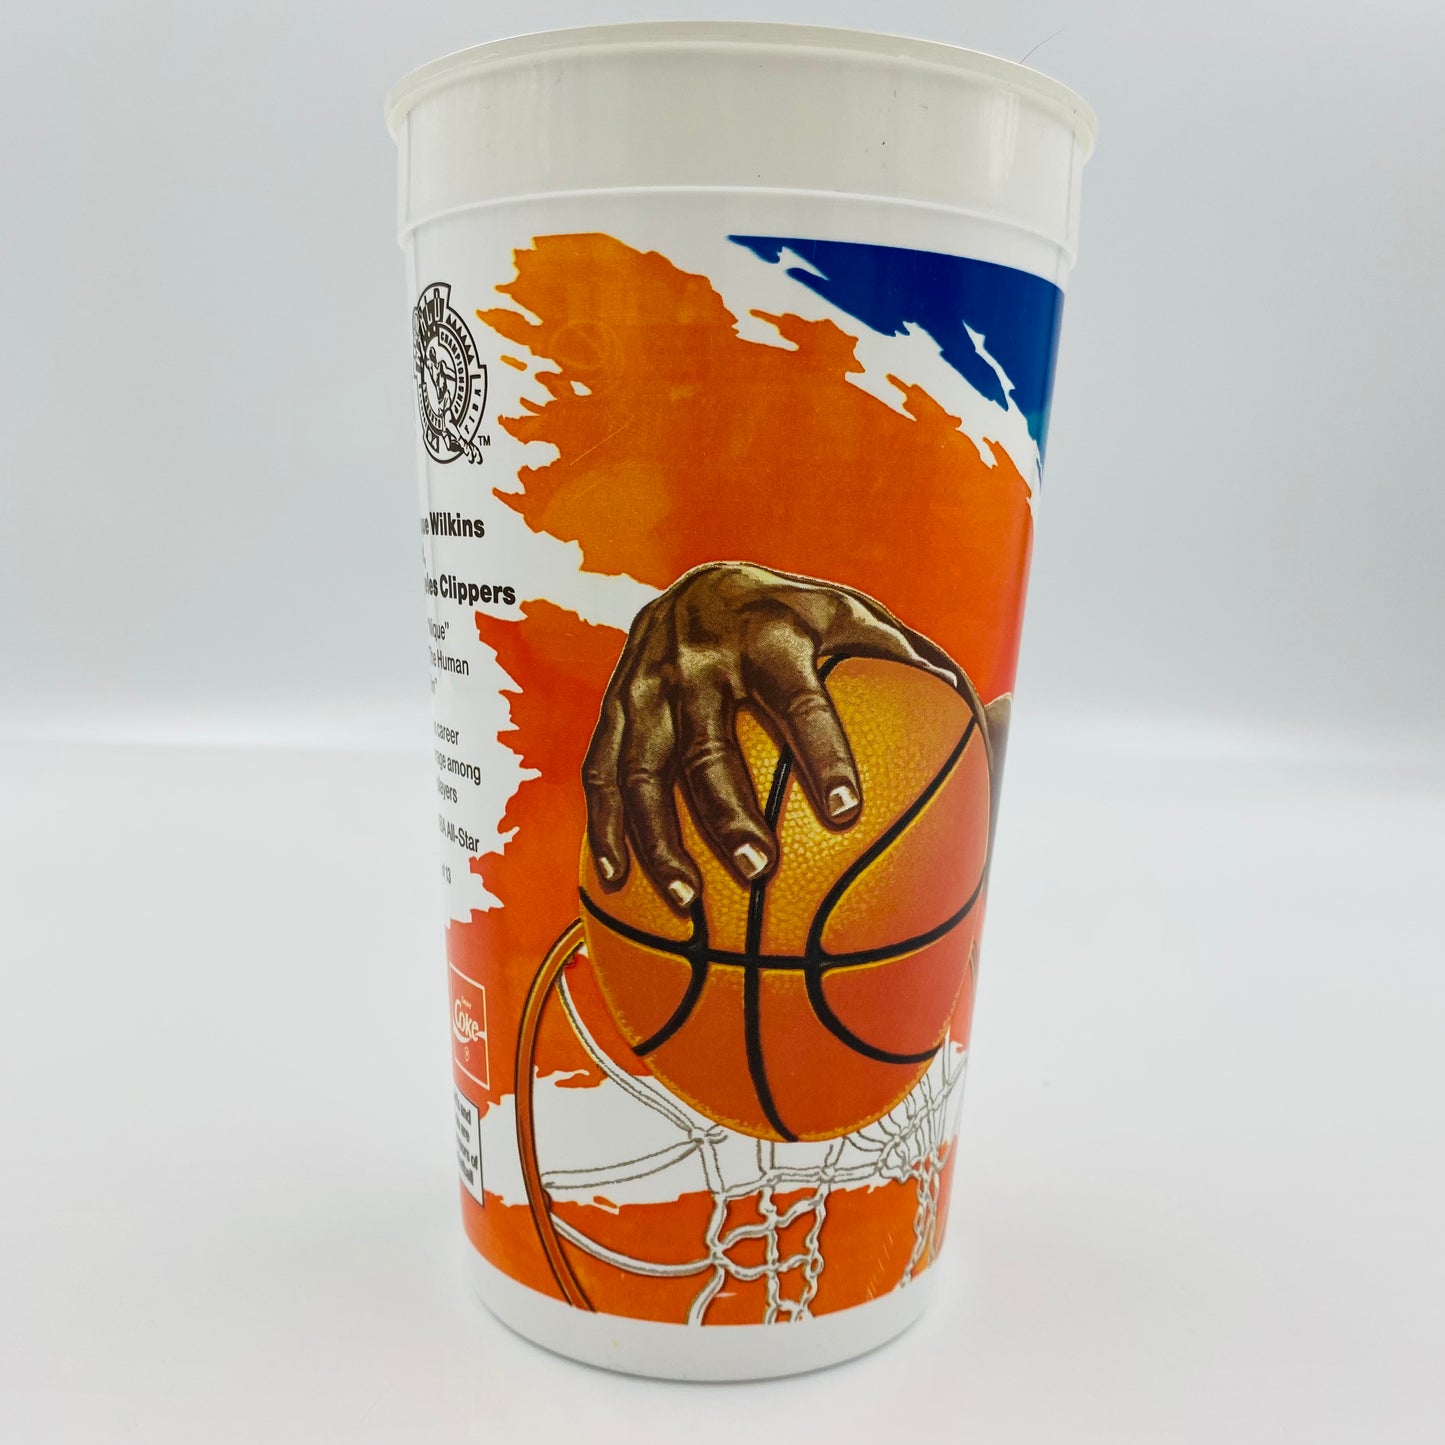 USA Basketball Dream Team II Dominique Wilkins 32oz plastic cup (1994) McDonald’s